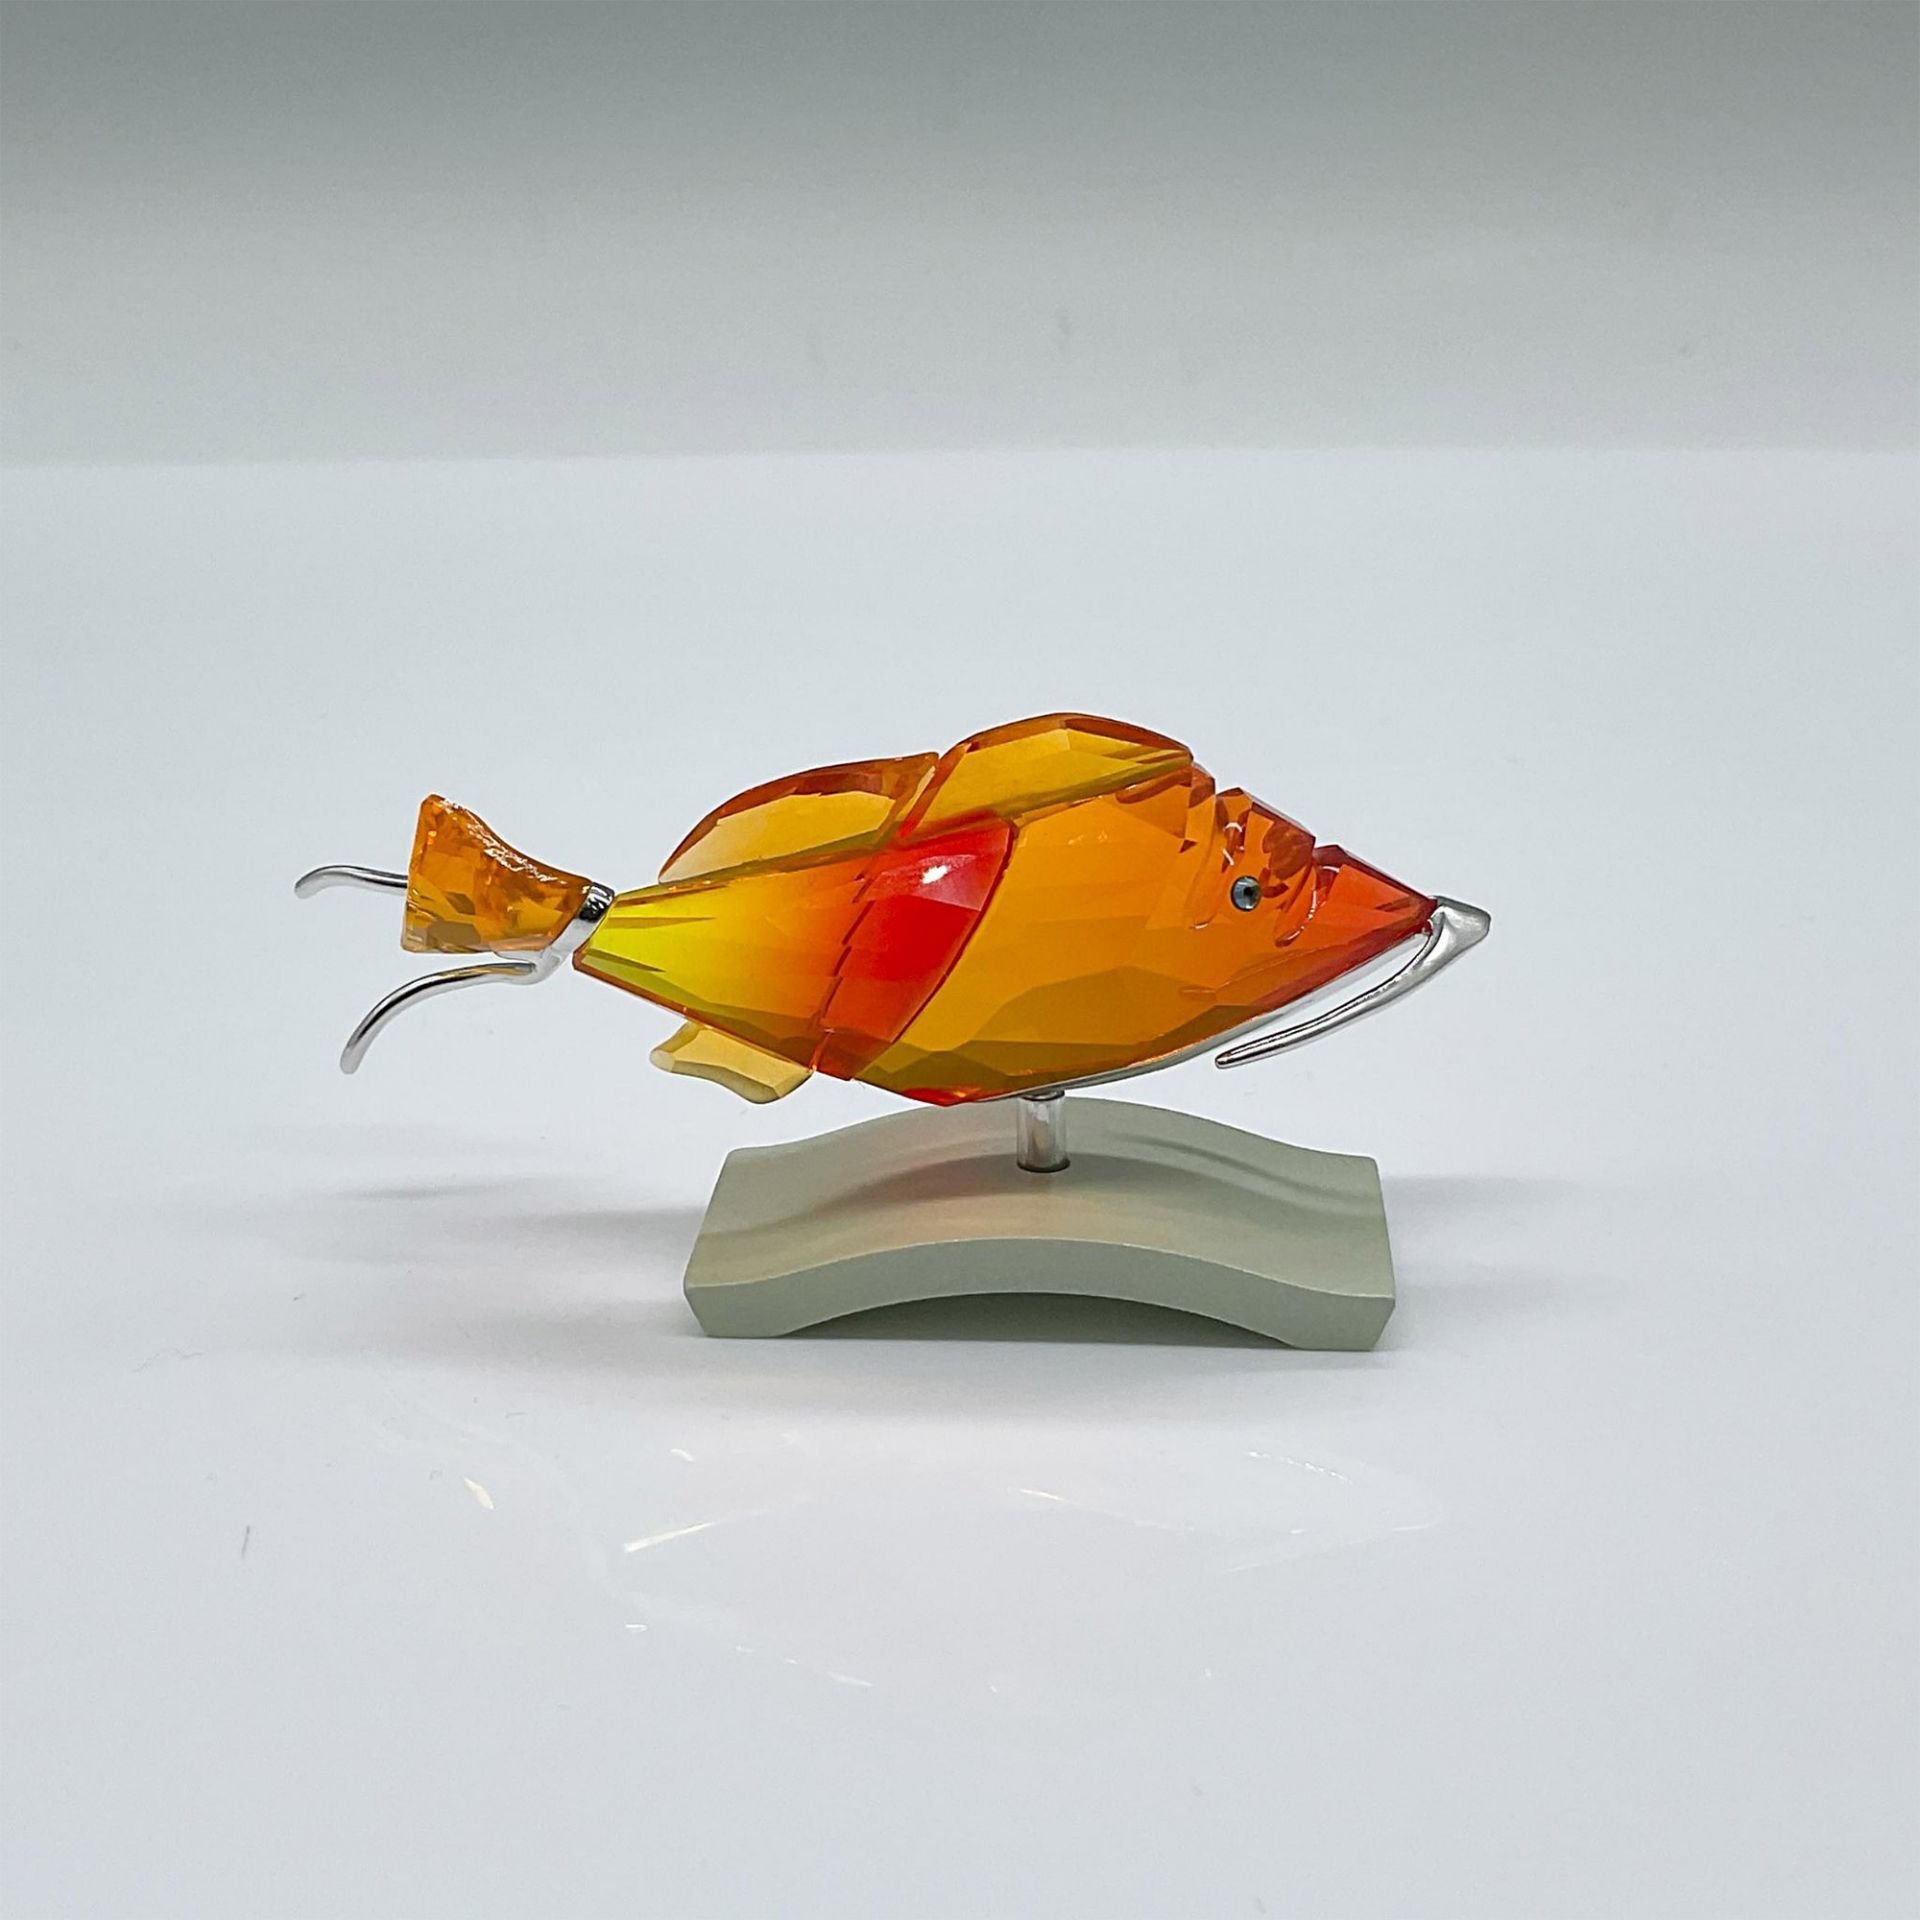 Swarovski Crystal Figurine, Paradise Fish - Crotone - Image 2 of 3